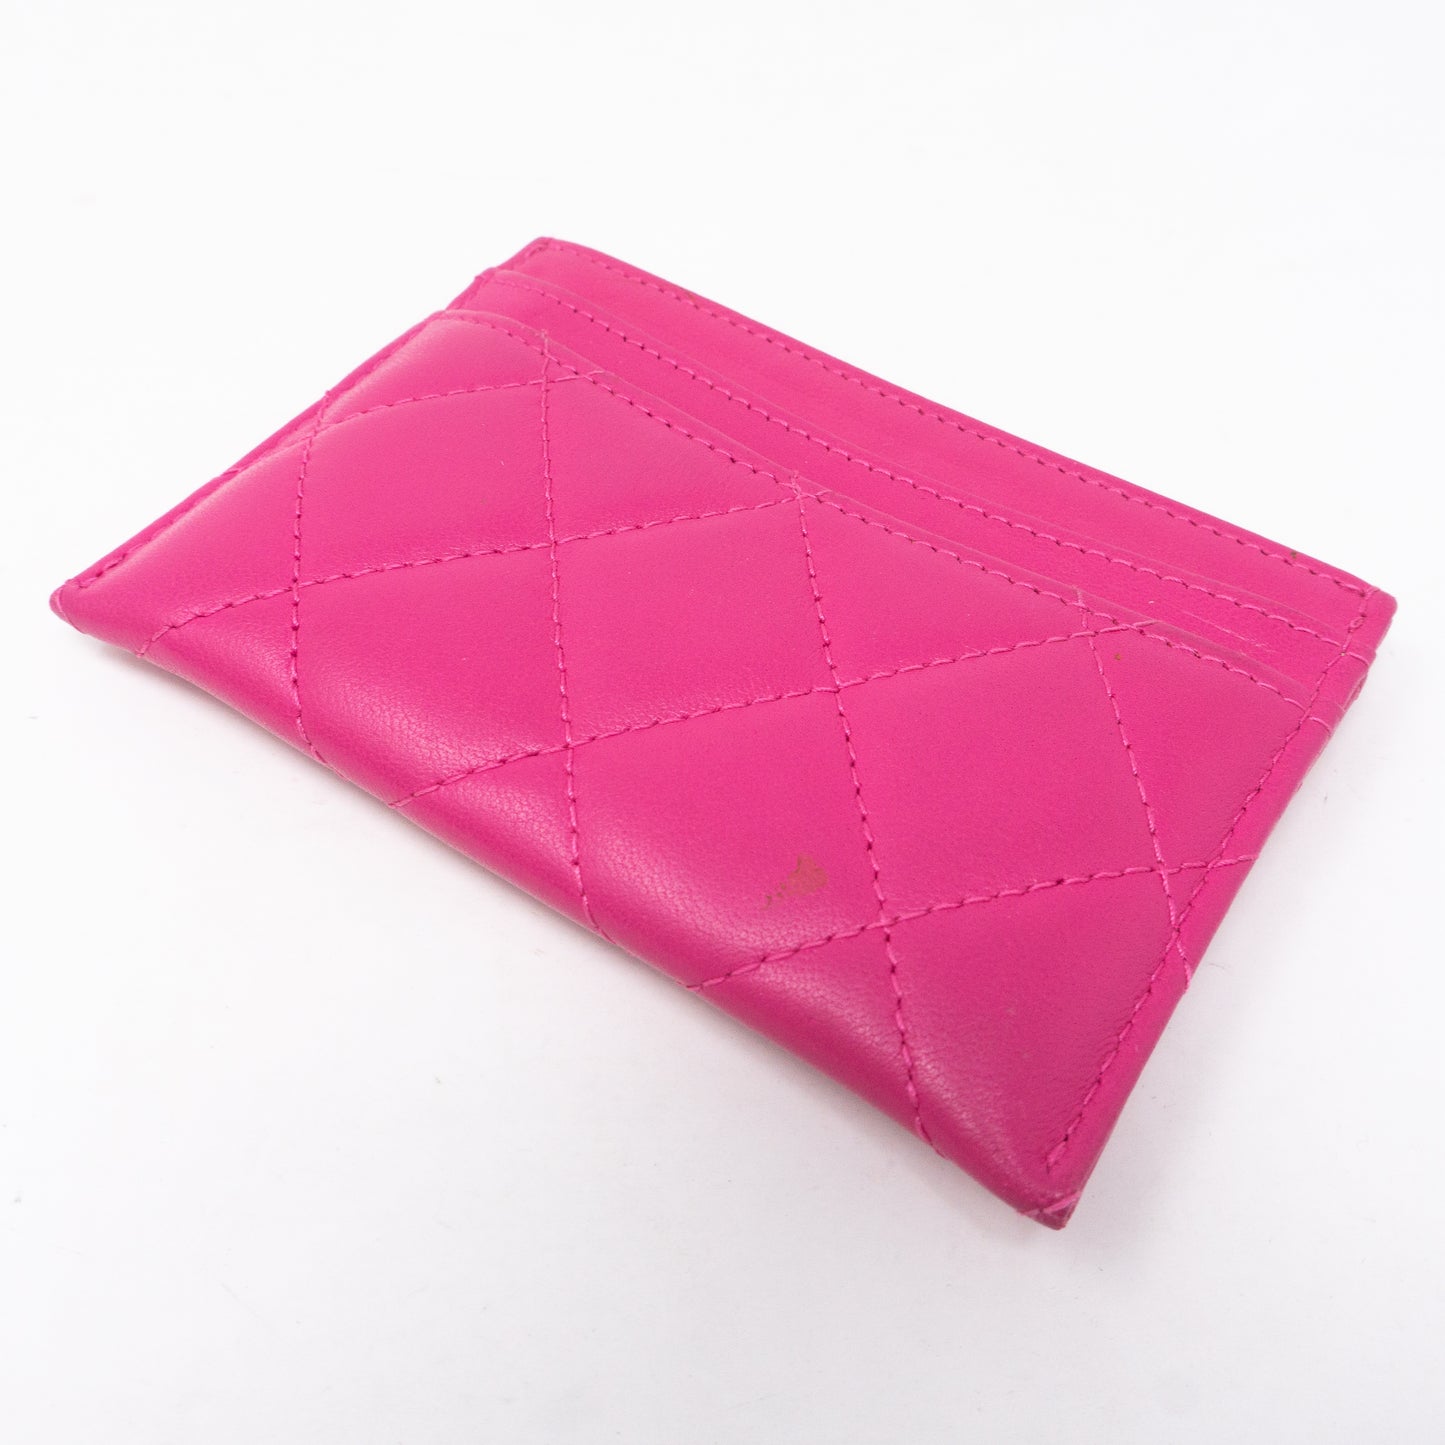 Card Holder Pink Leather